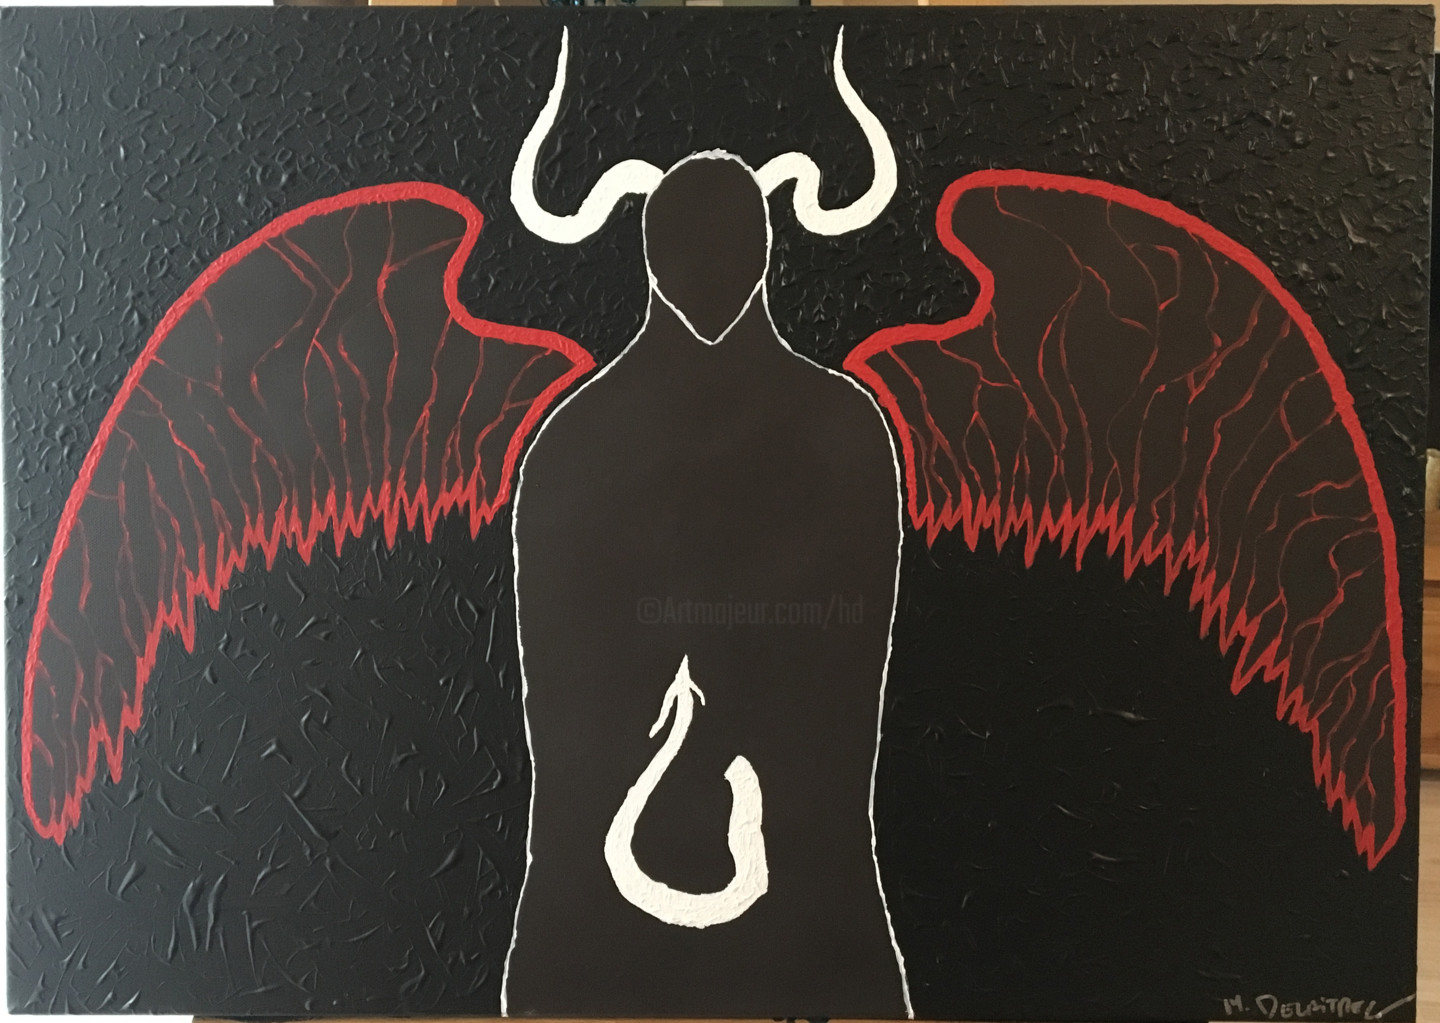 ange of demon